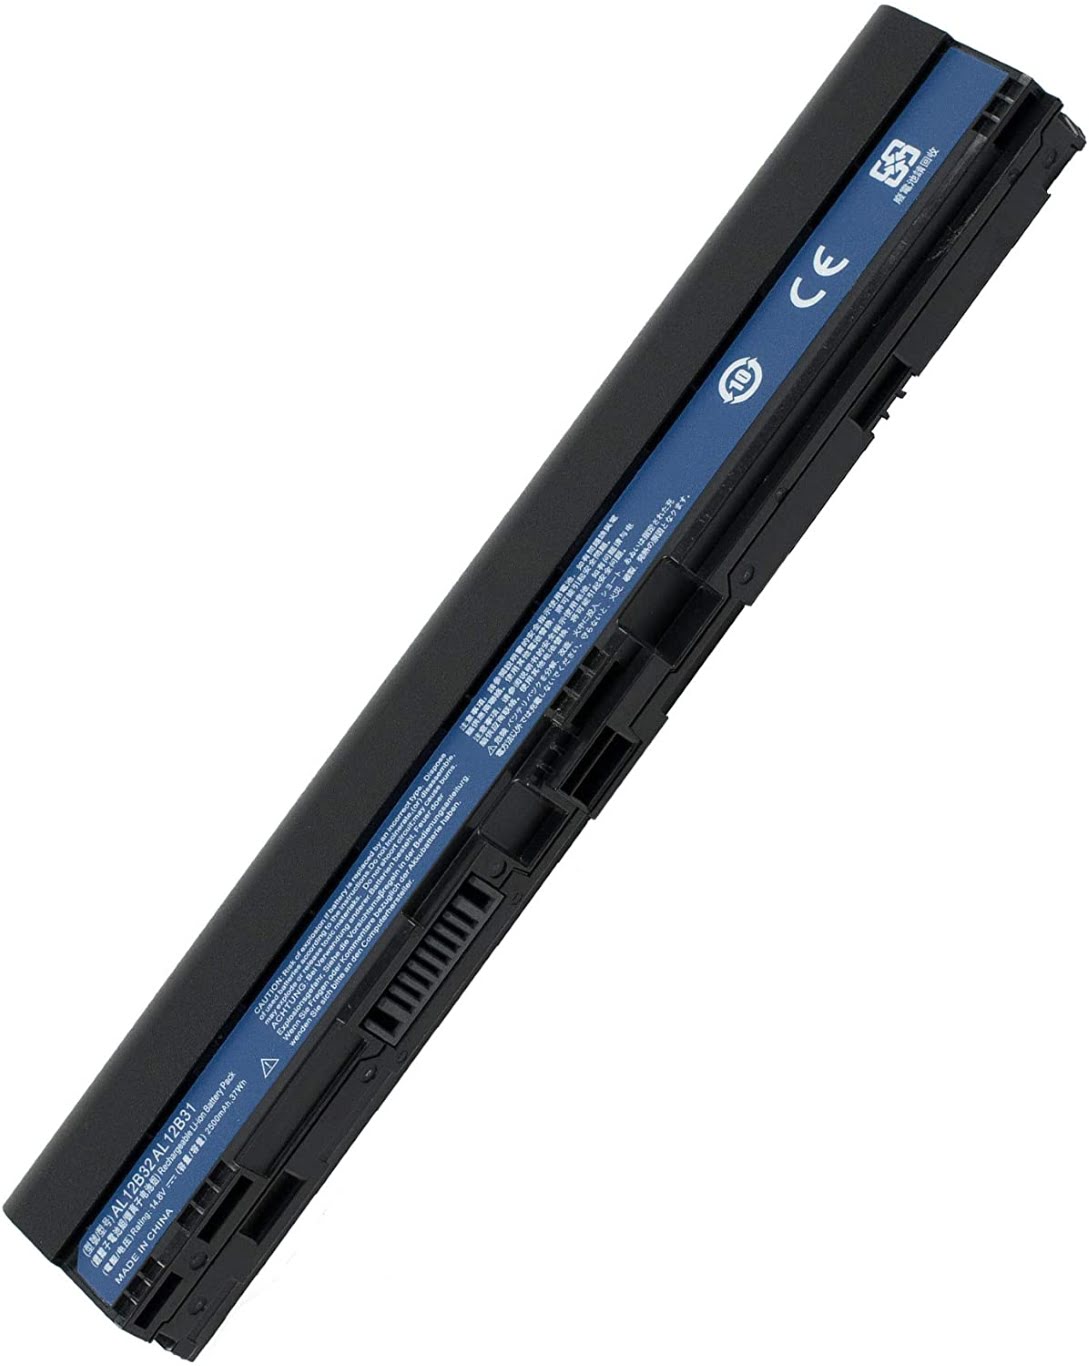 AK.004BT.098, AL12A31 replacement Laptop Battery for Acer Aspire C7 Chromebook Series, Aspire C710 Chromebook Series, 2500mah / 37wh, 4 cells, 14.8V